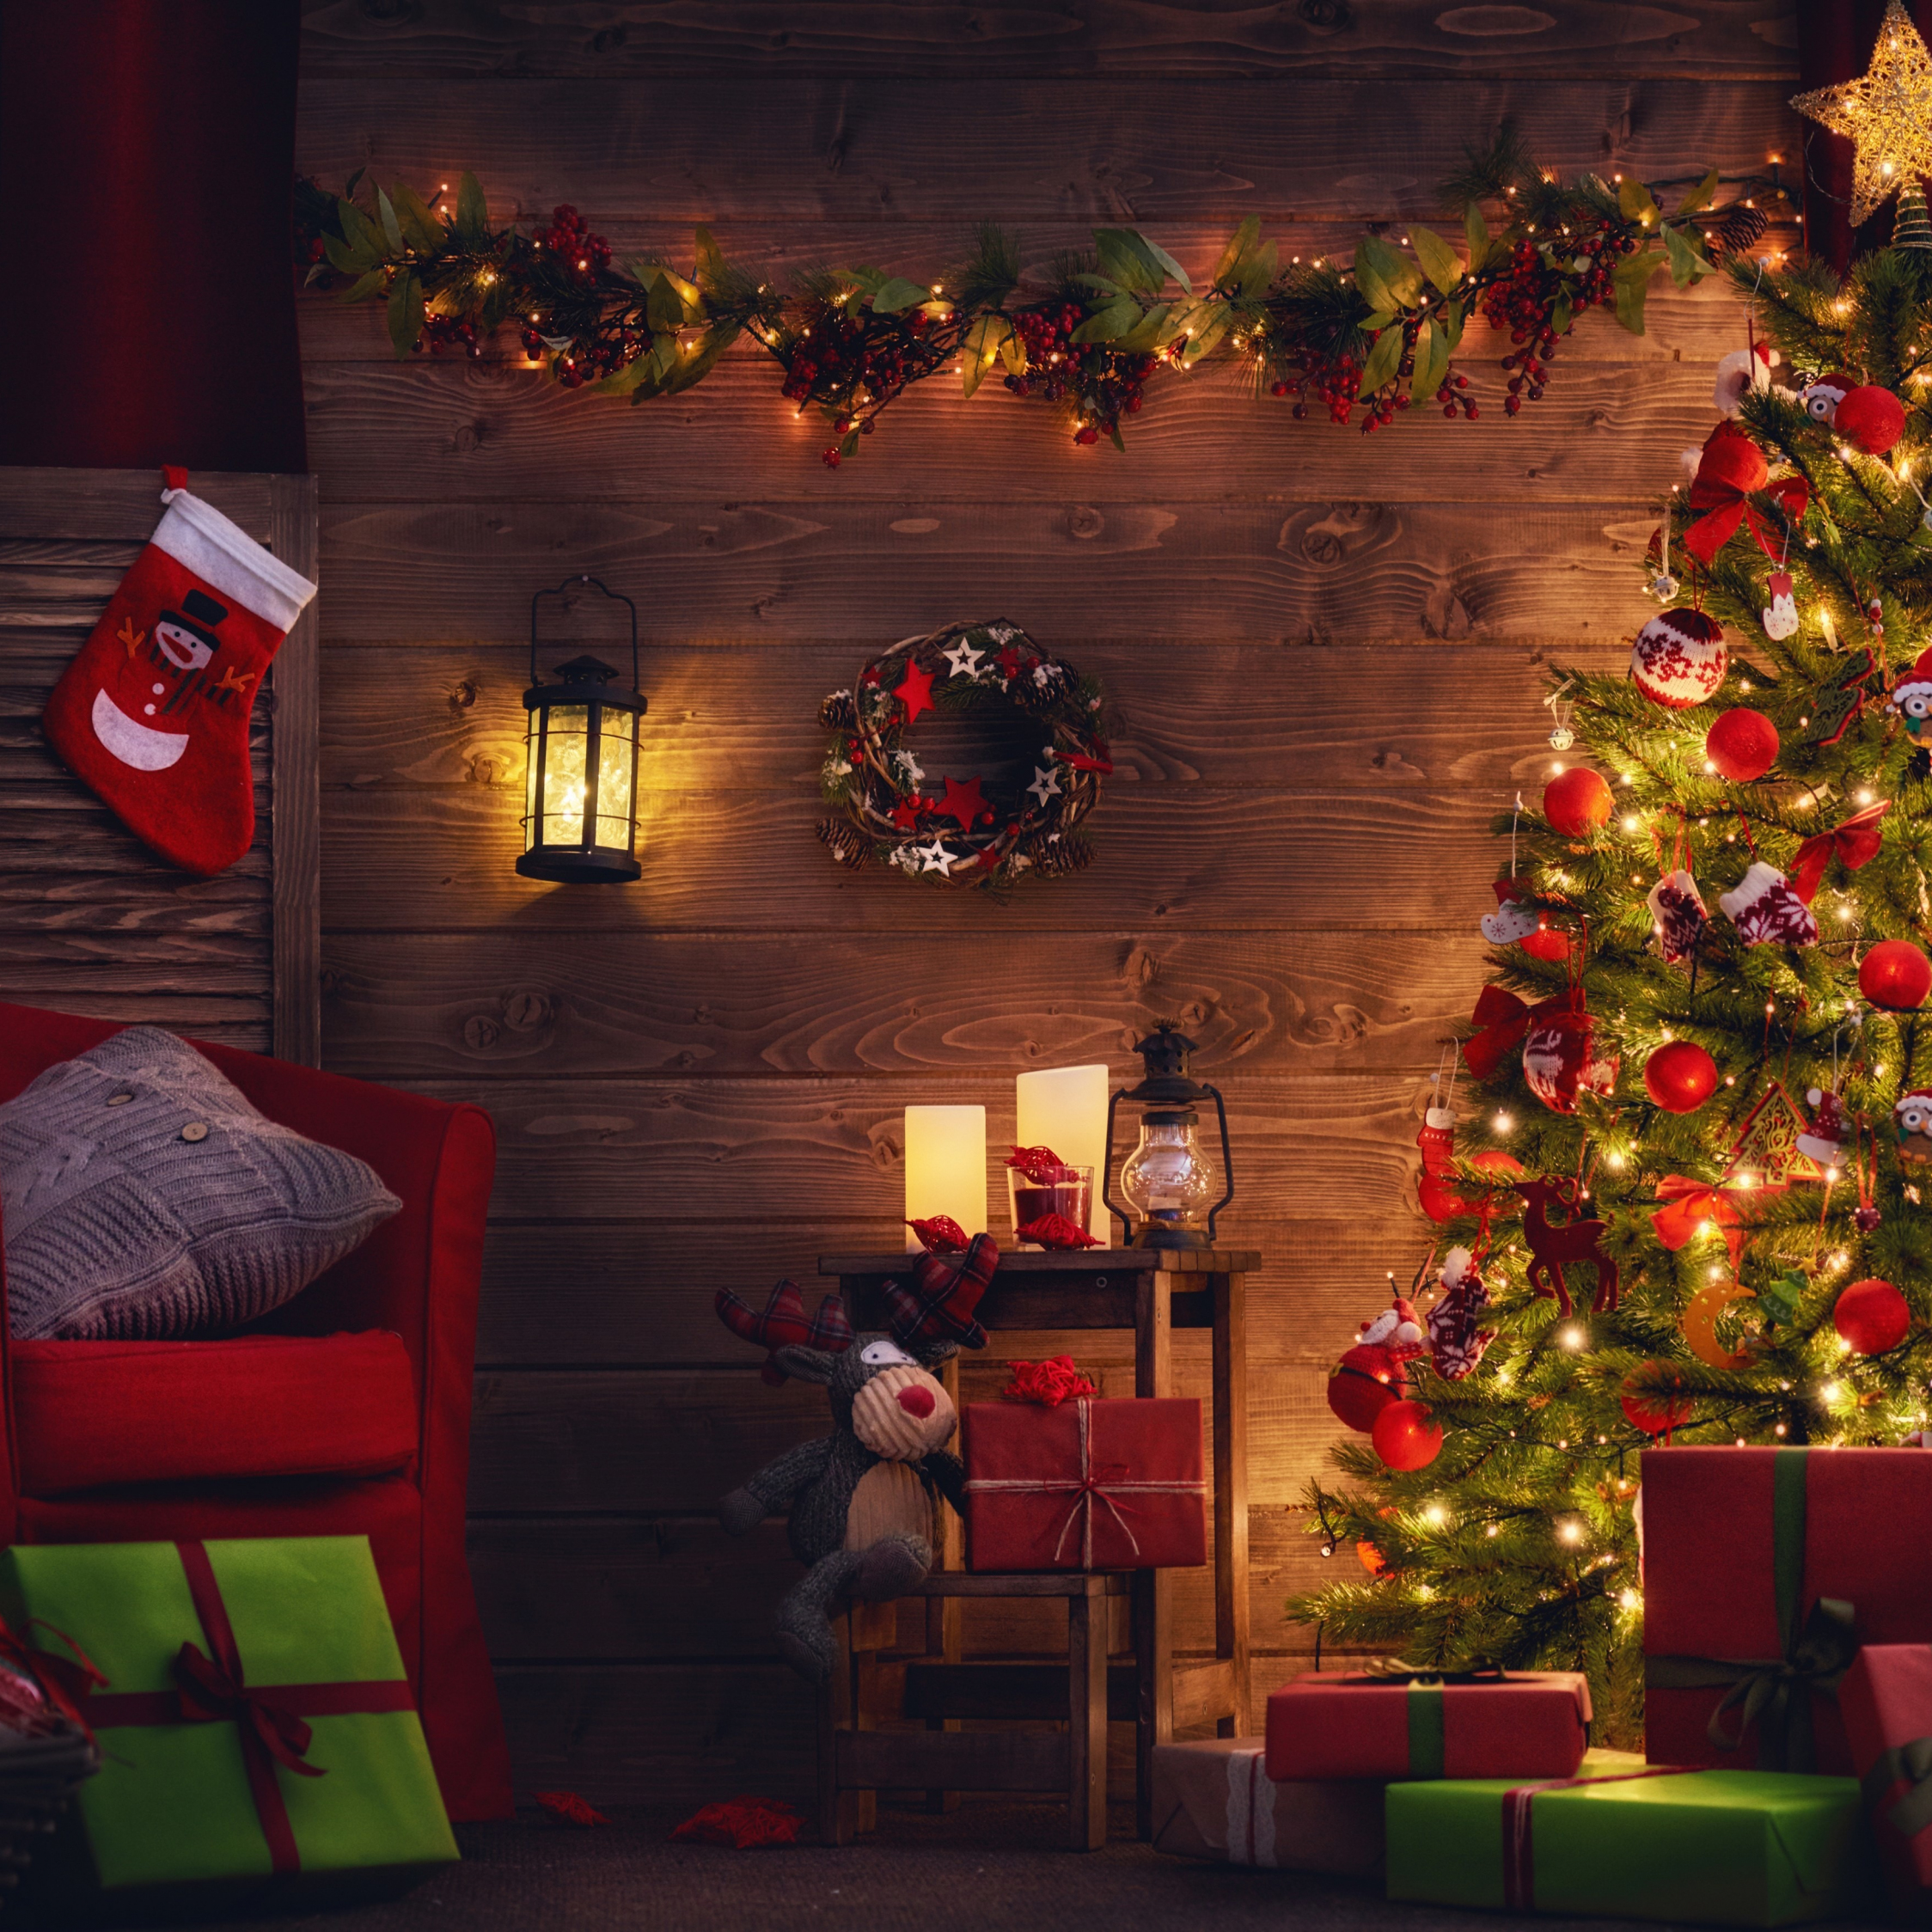 Download 2248x2248 wallpaper christmas tree, holiday, decorations, gifts, ipad air, ipad air ipad ipad ipad mini ipad mini 2248x2248 HD image, background, 1681